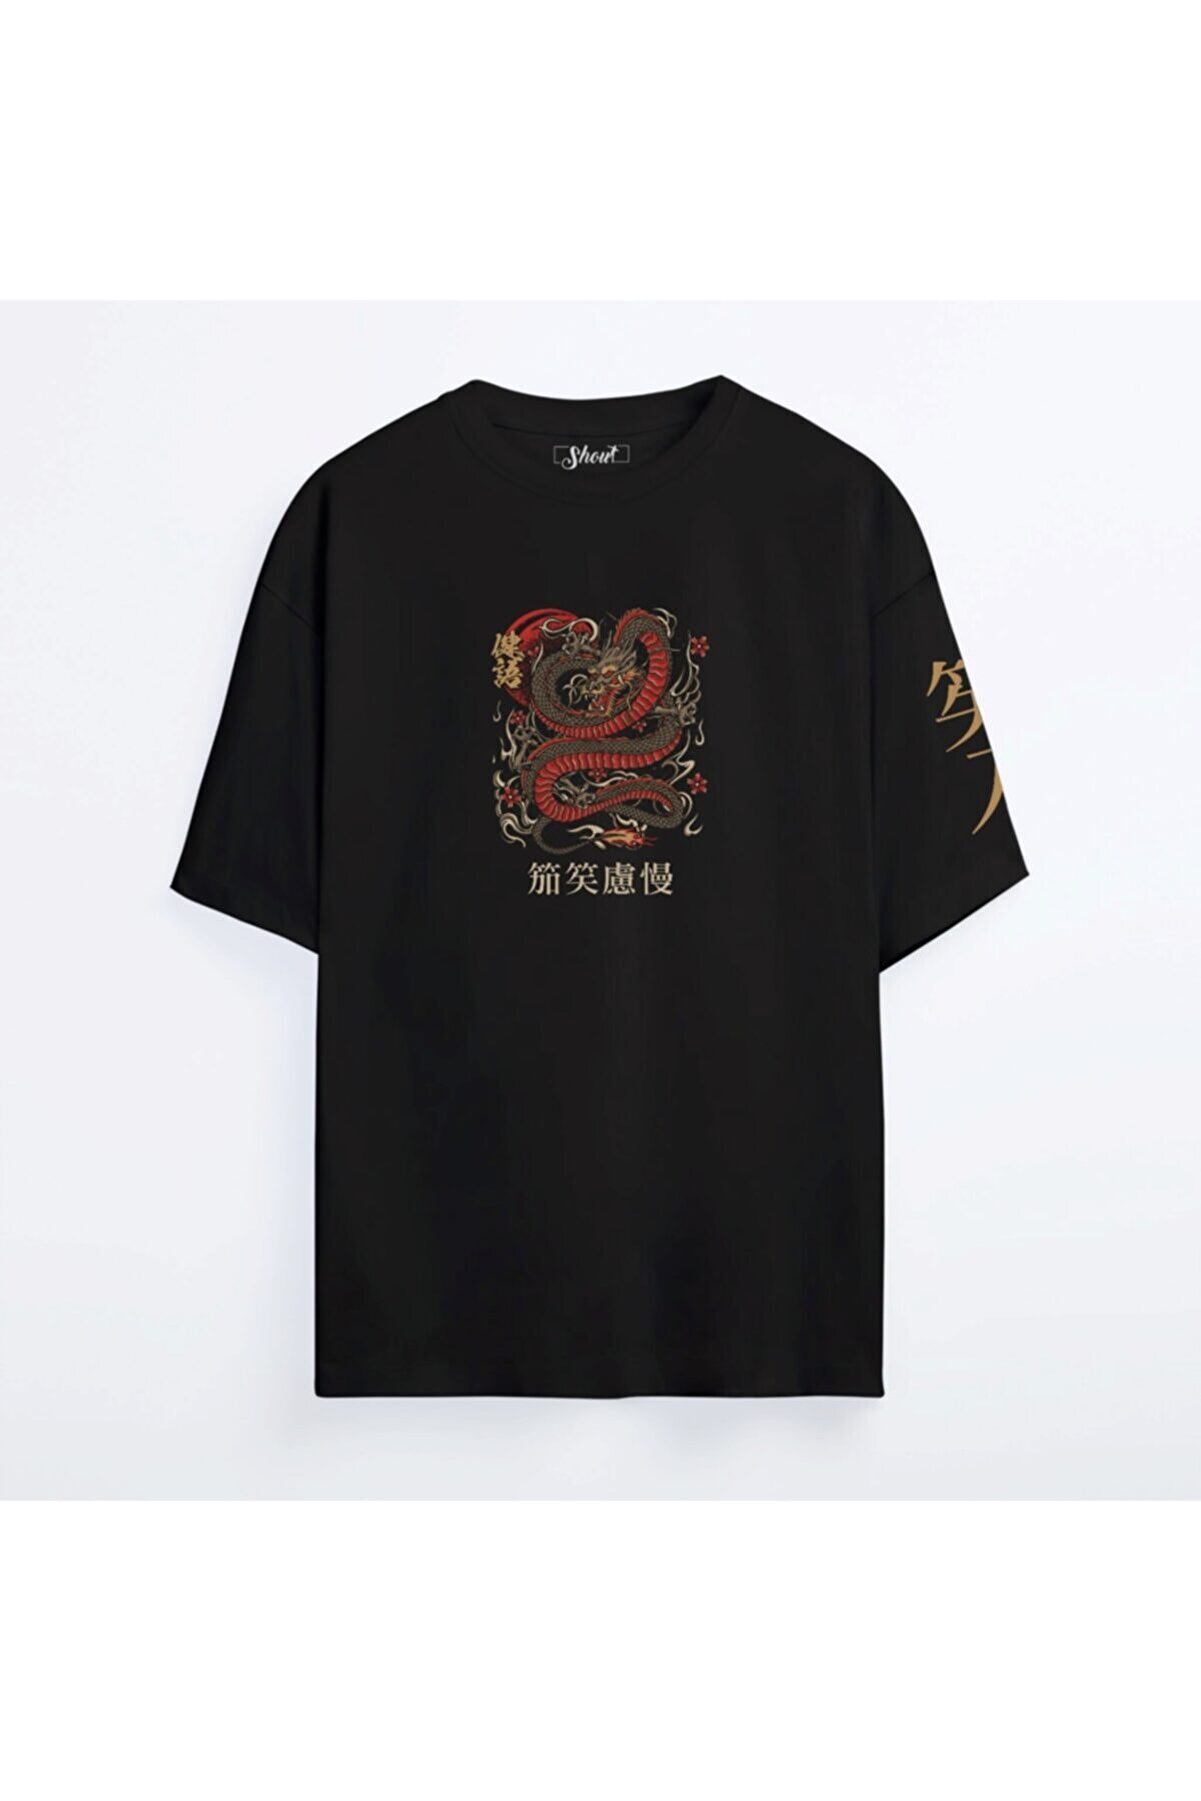 Shout Oversize Dragon Oldschool Unisex T-shirt